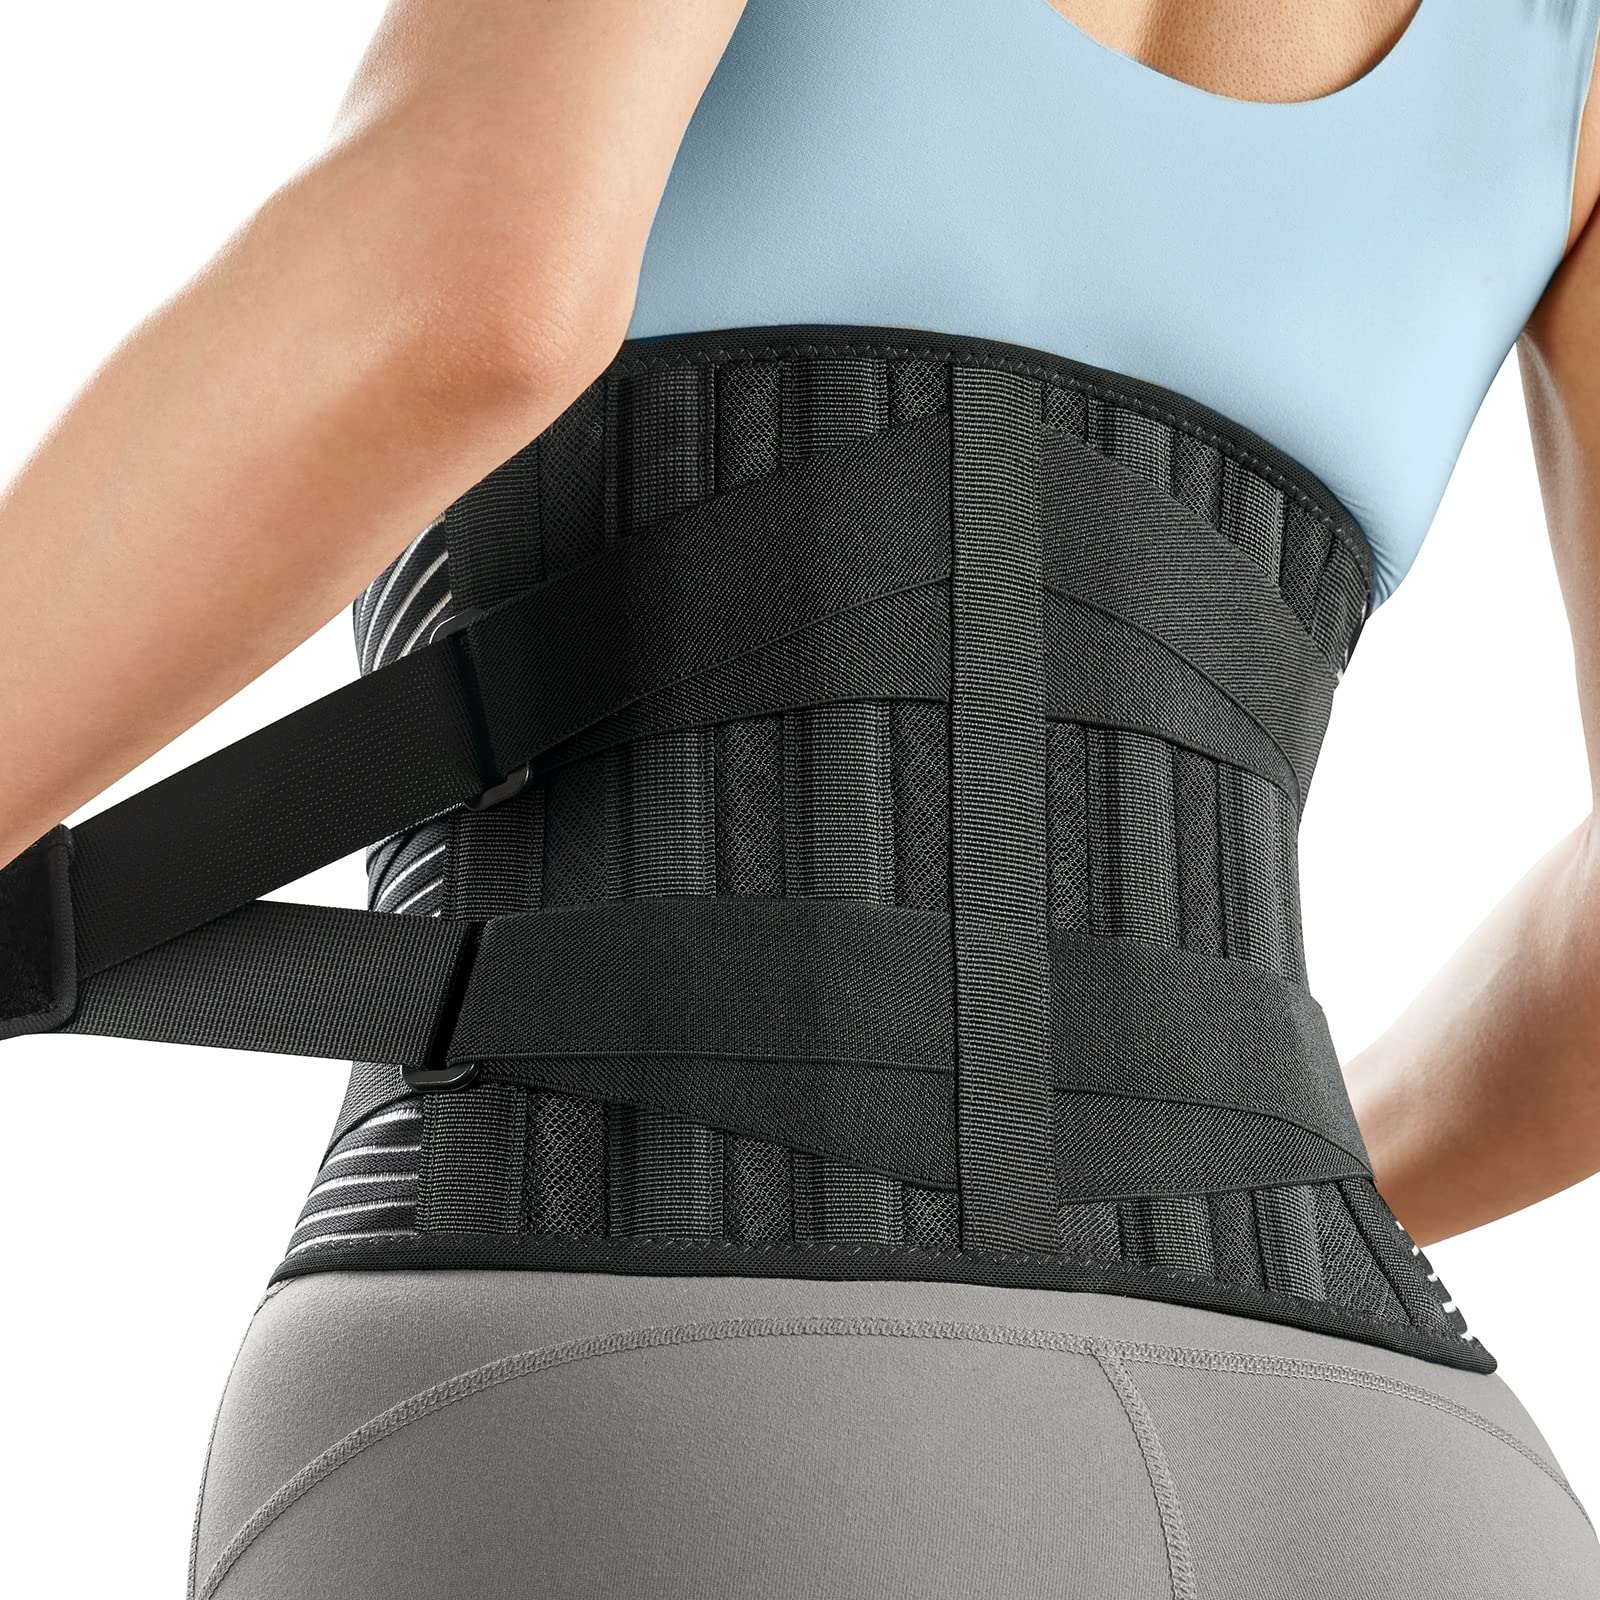 Lower Back Pain Relief Belt Back Brace Waist Support for Work